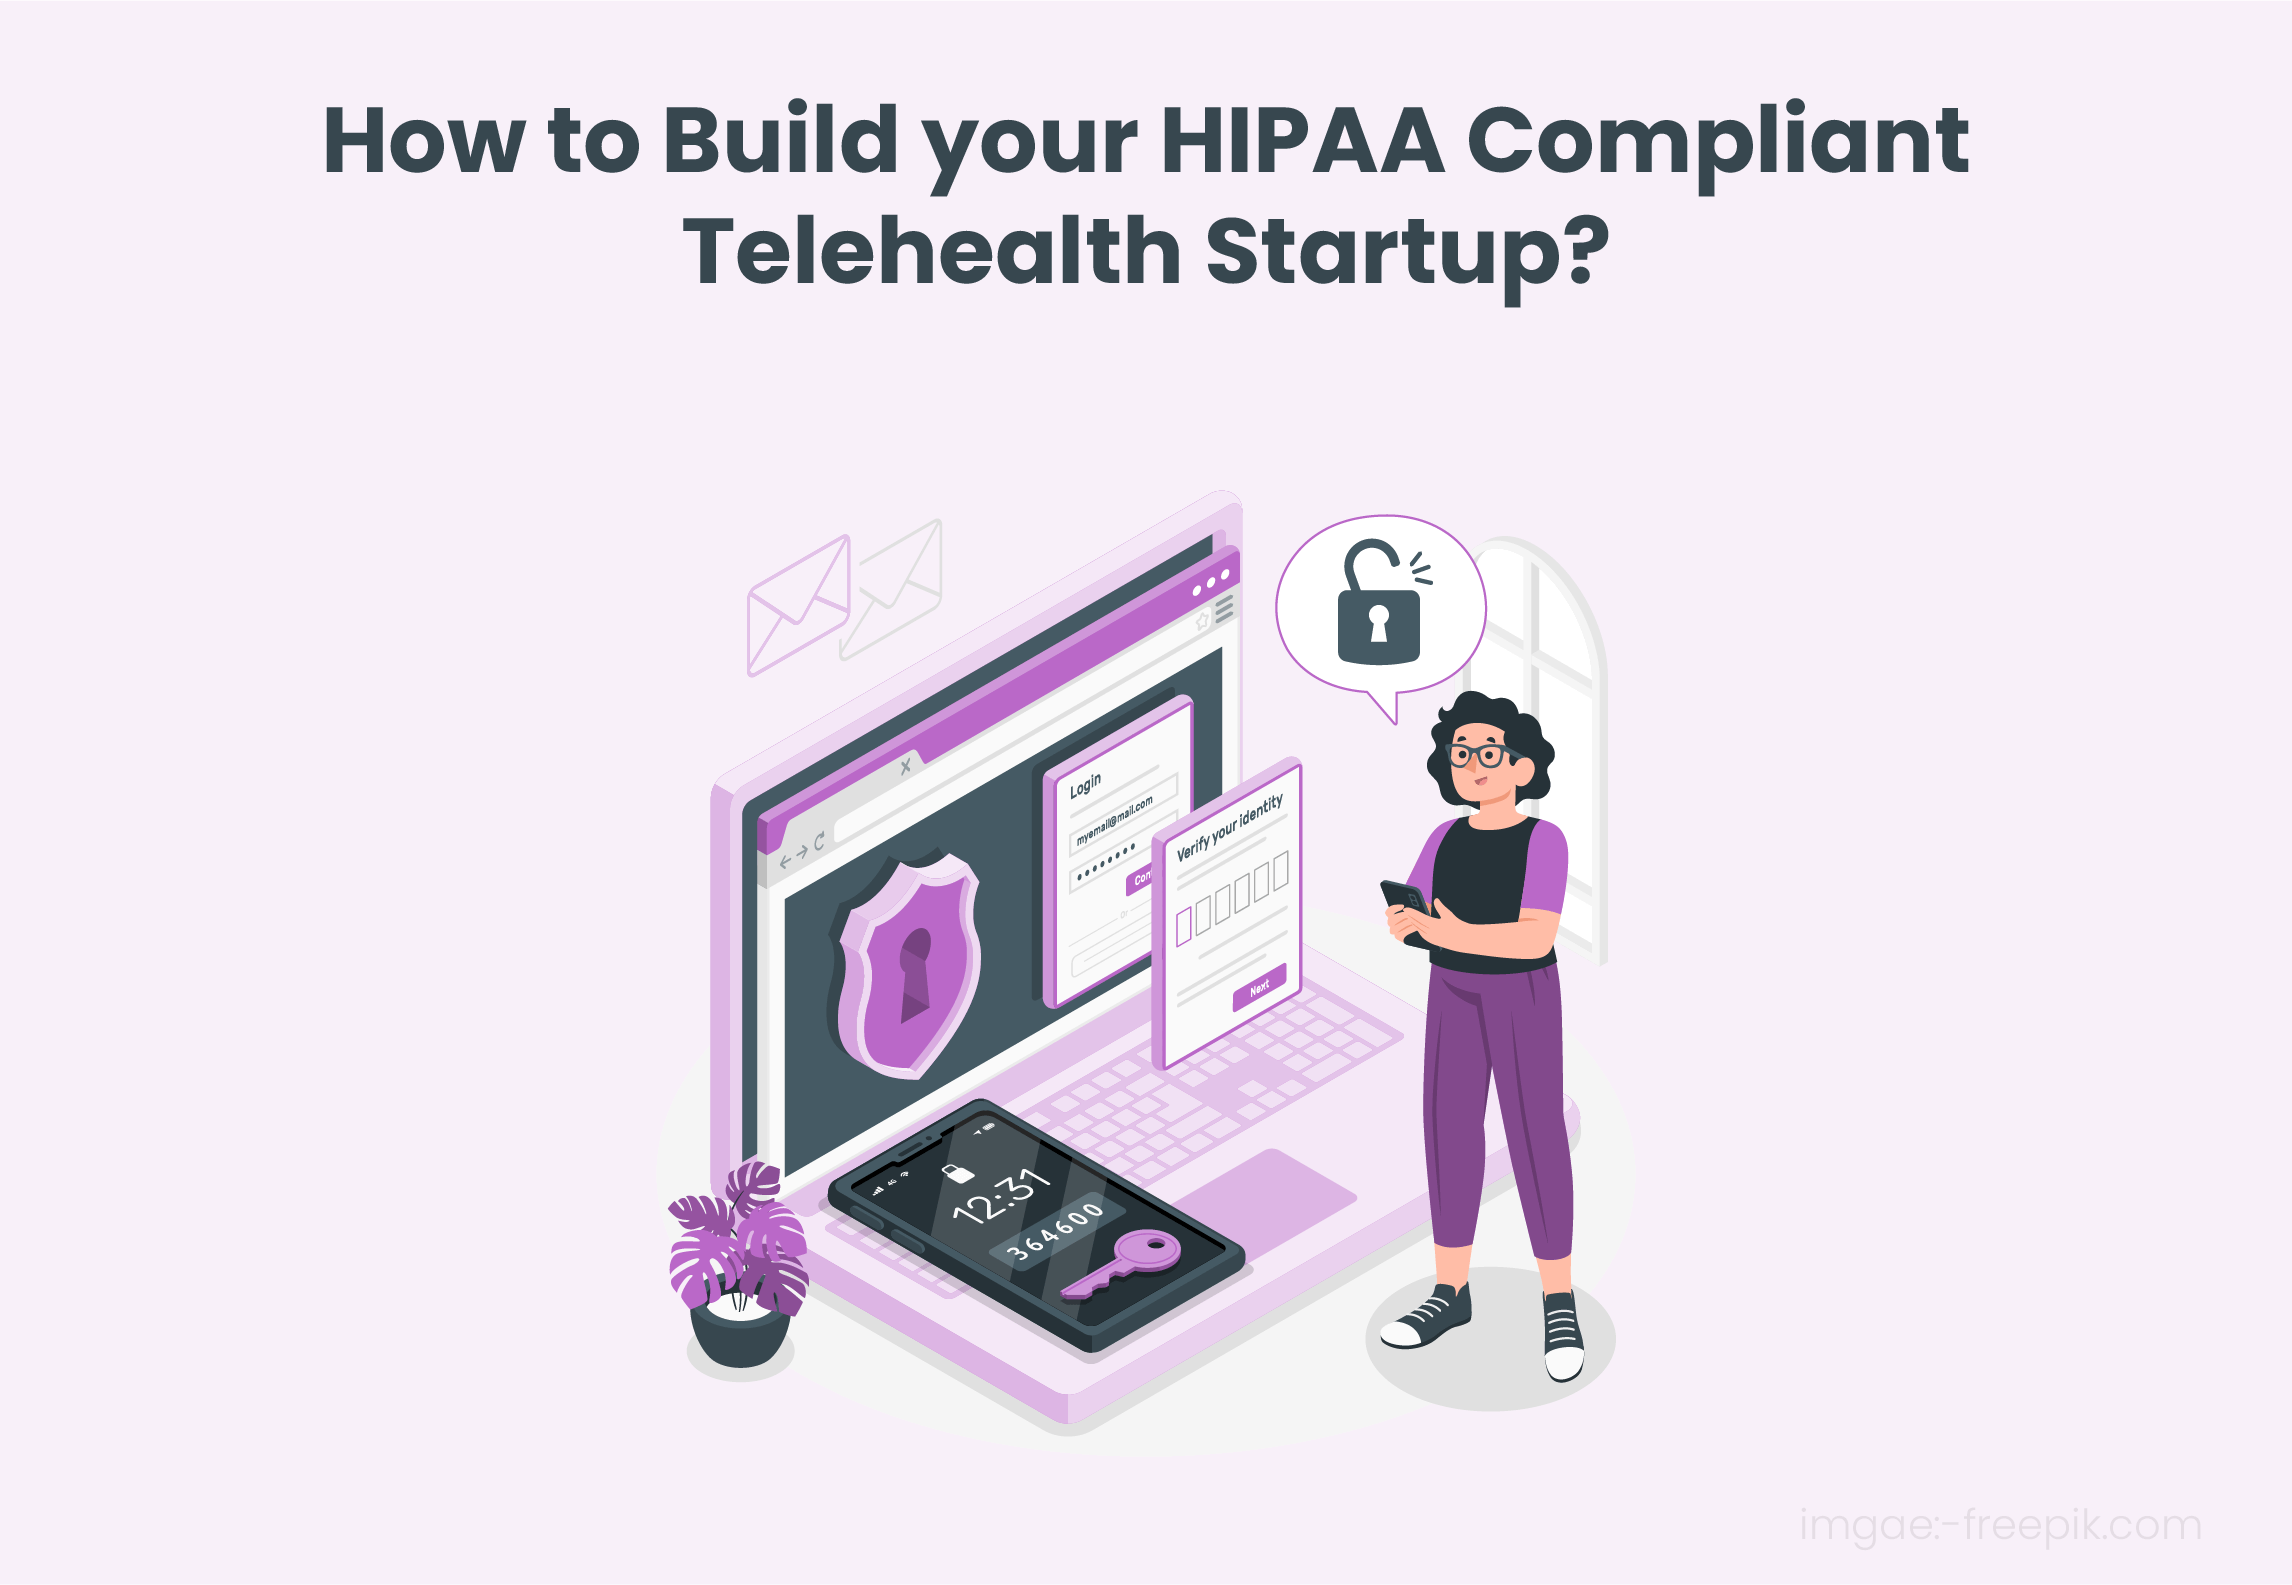 HIPAA Compliant Telehealth Startup